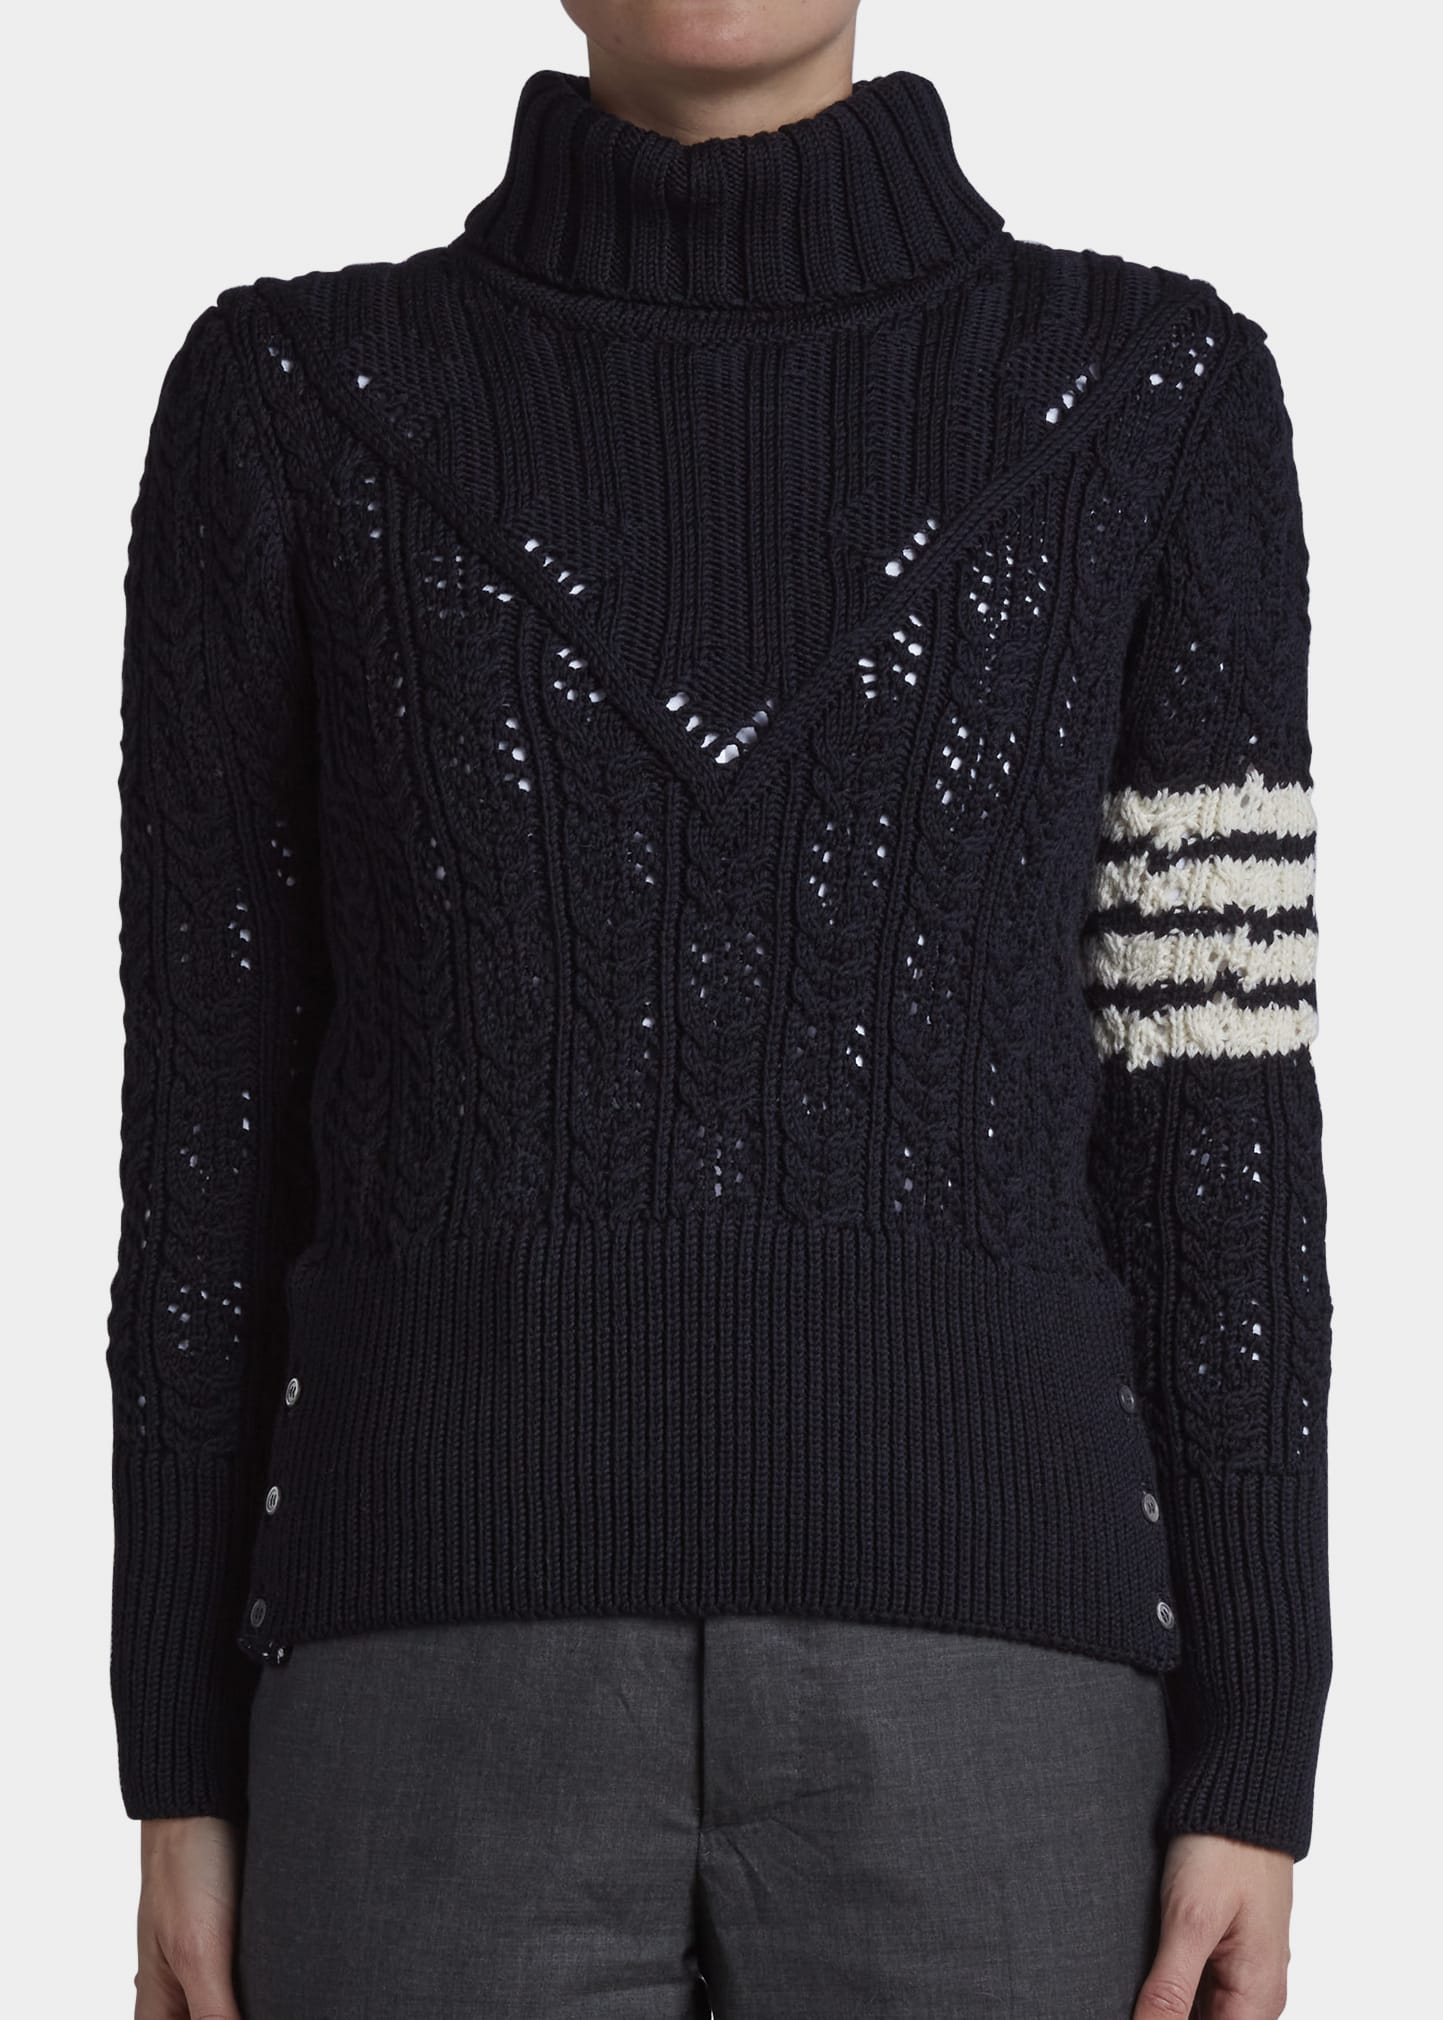 Thom Browne Merino Wool Pointelle Knit Turtleneck Sweater